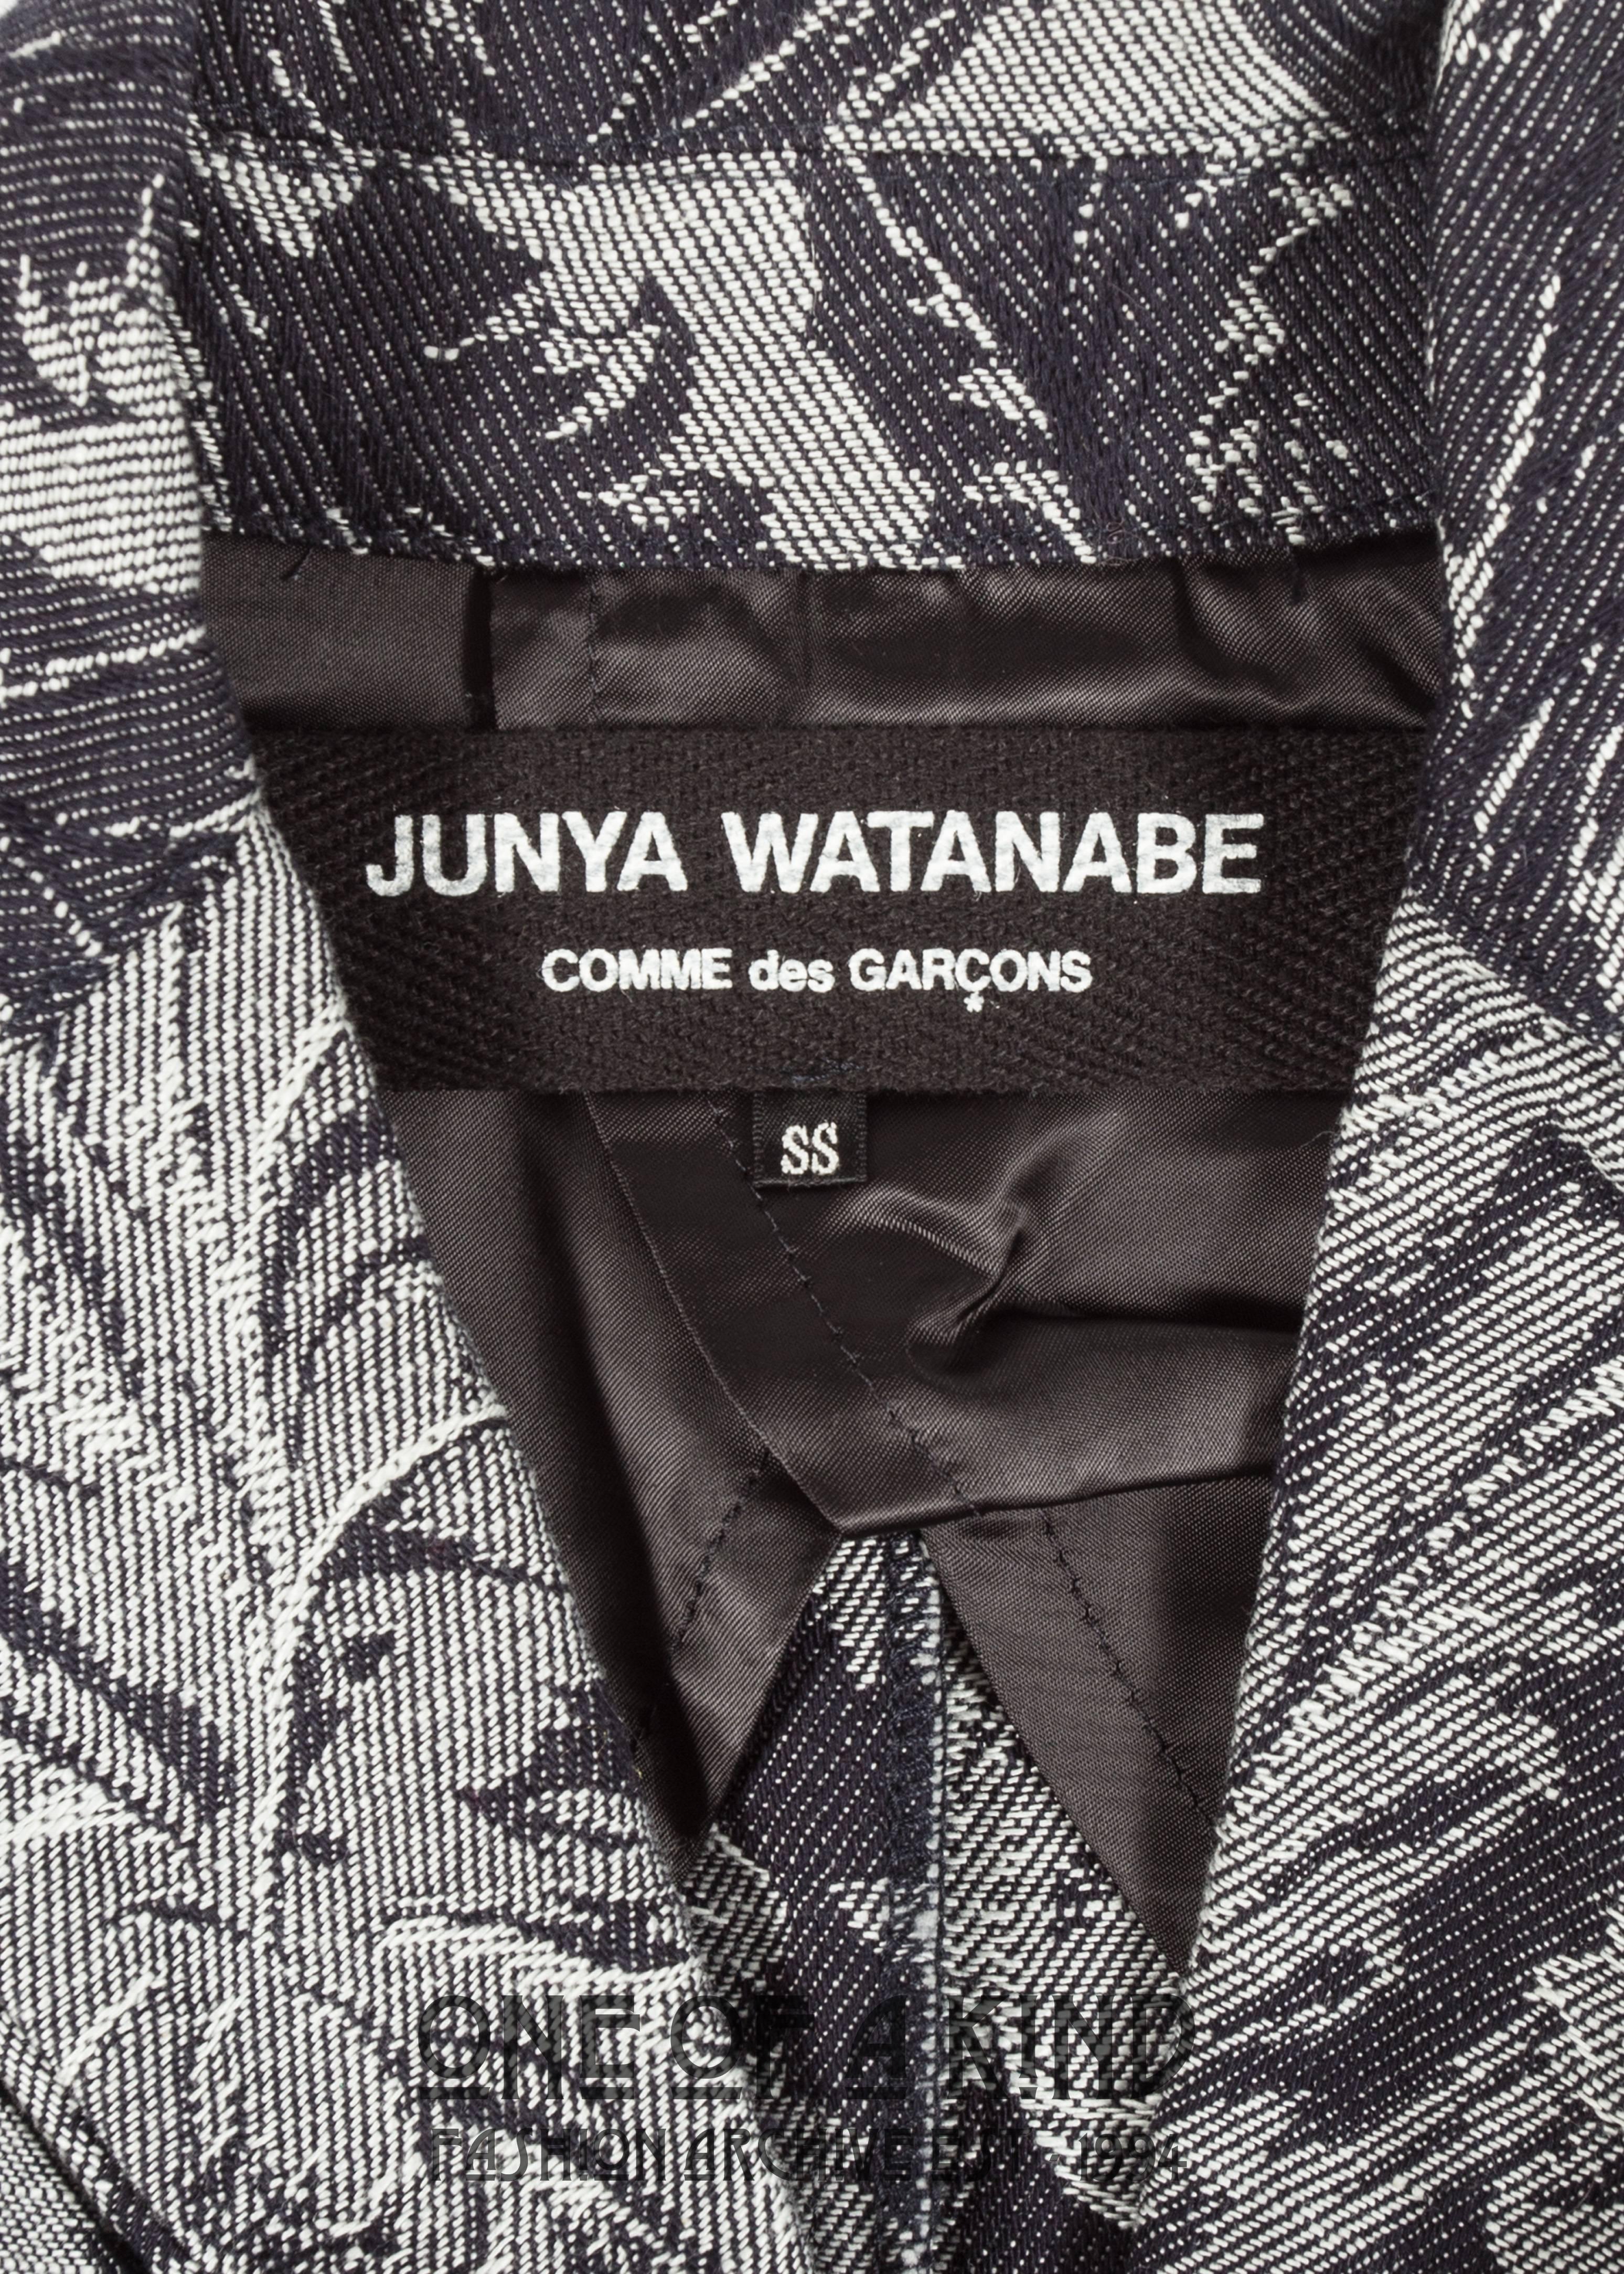 Junya Watanabe Spring-Summer 2007 jacquard denim tailored skinny pant suit 2